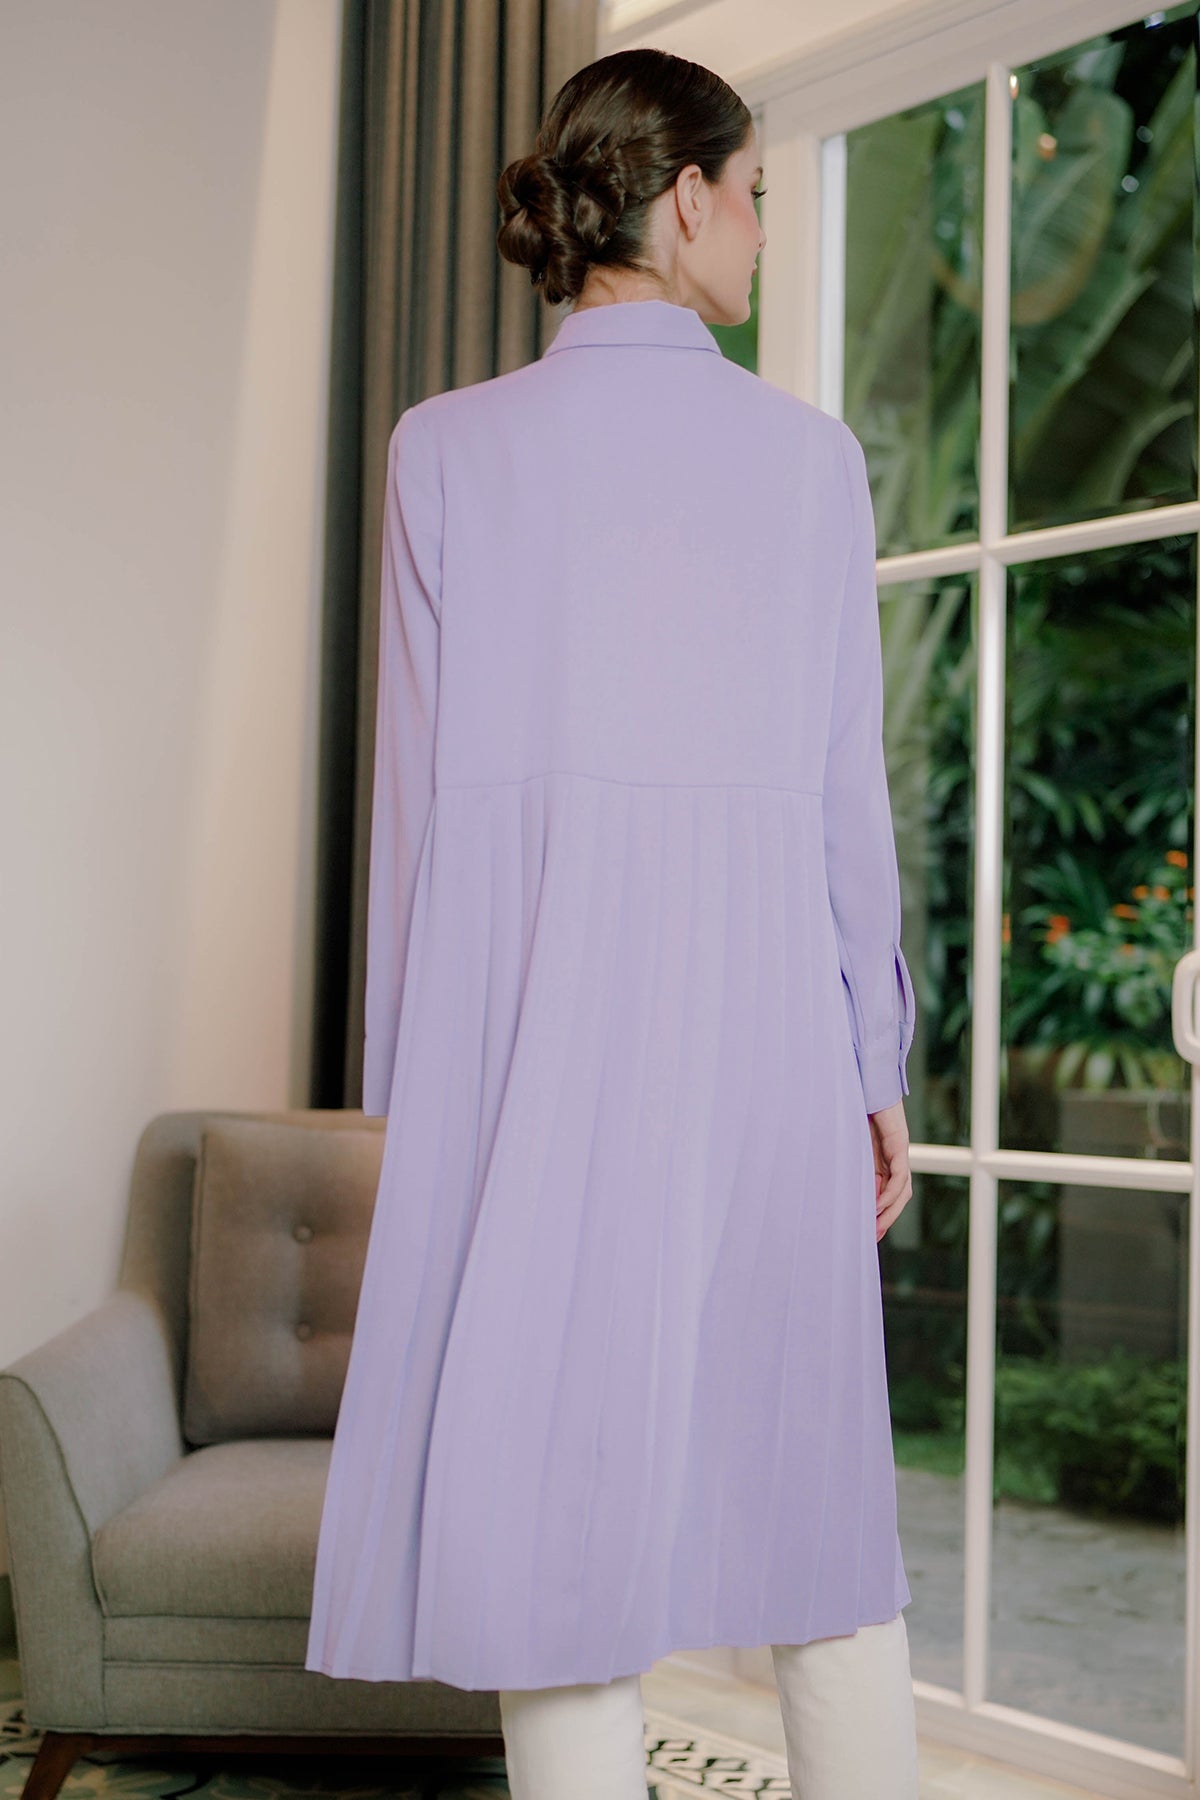 Catia Midi Dress - Lavender